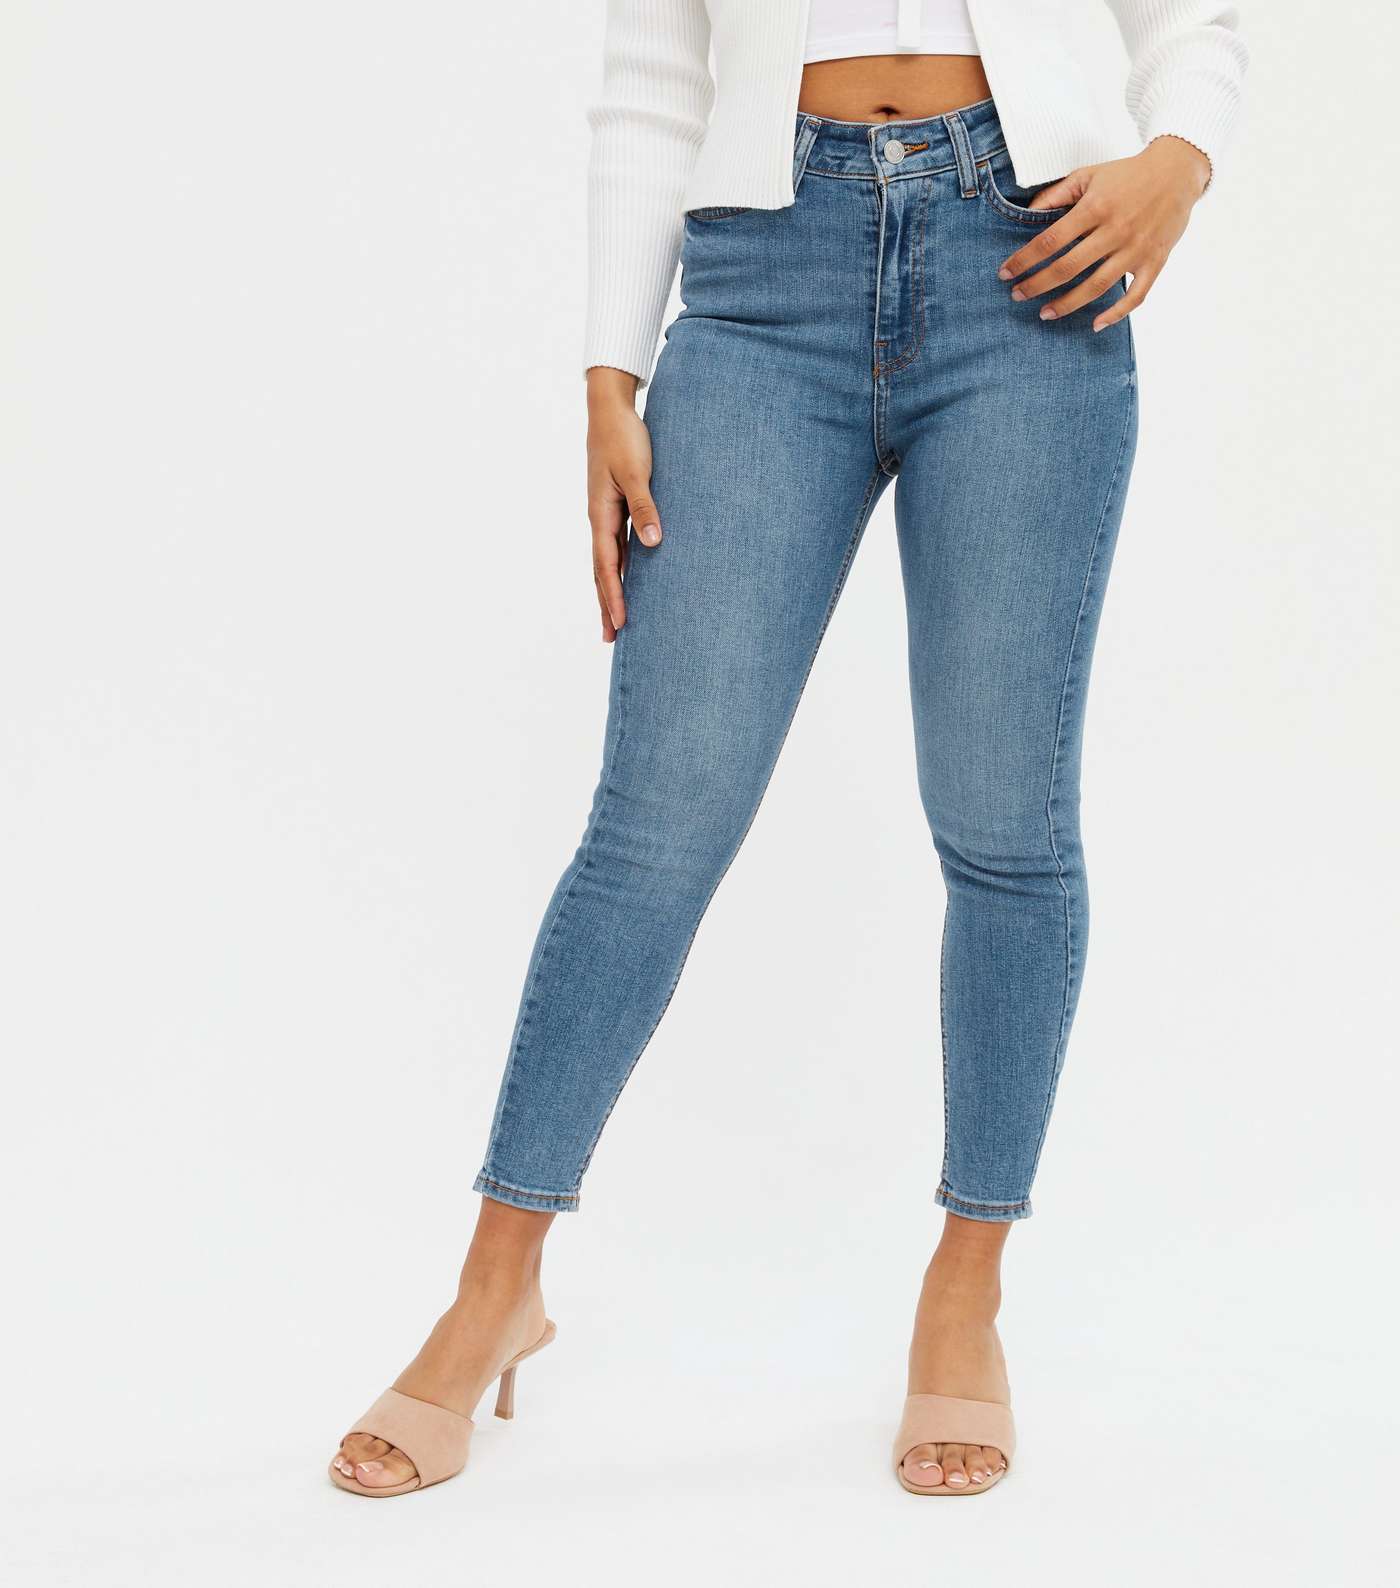 Petite Blue Cropped Lift & Shape Jenna Skinny Jeans Image 2